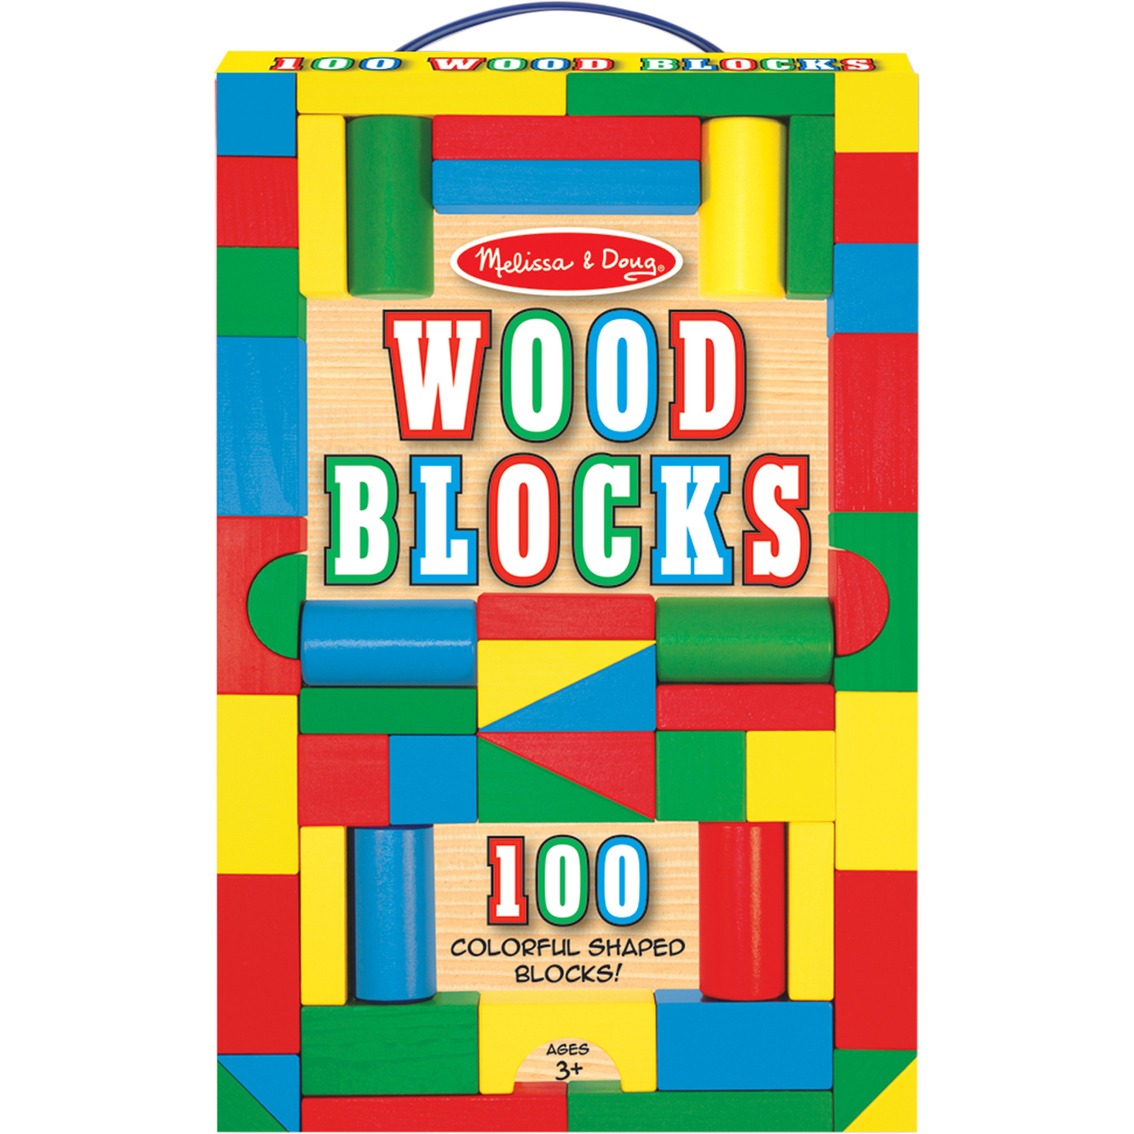 Melissa & Doug 100 pc. Wood Blocks Set - Image 2 of 8